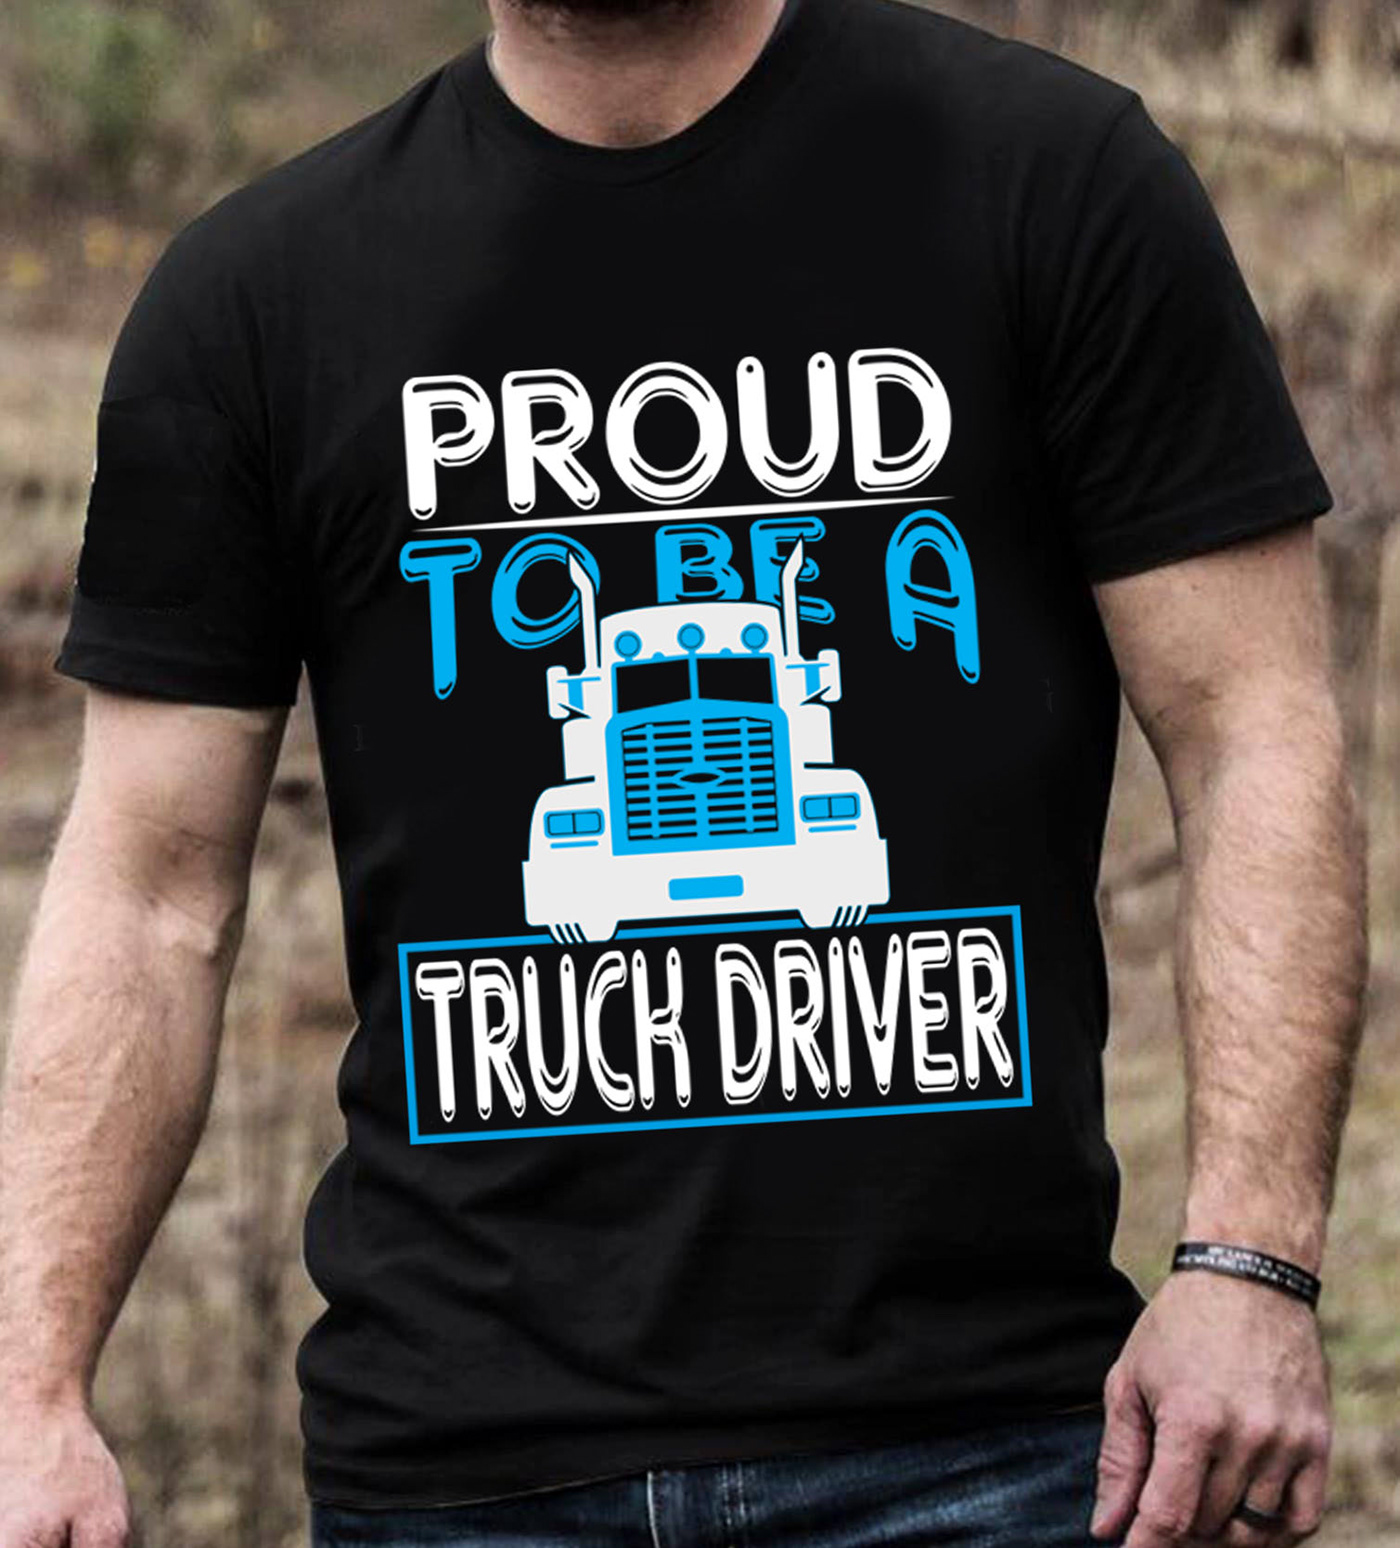 Transport Truck truck art Trucker truckers trucking trucks tructiepbongda tshirt vector